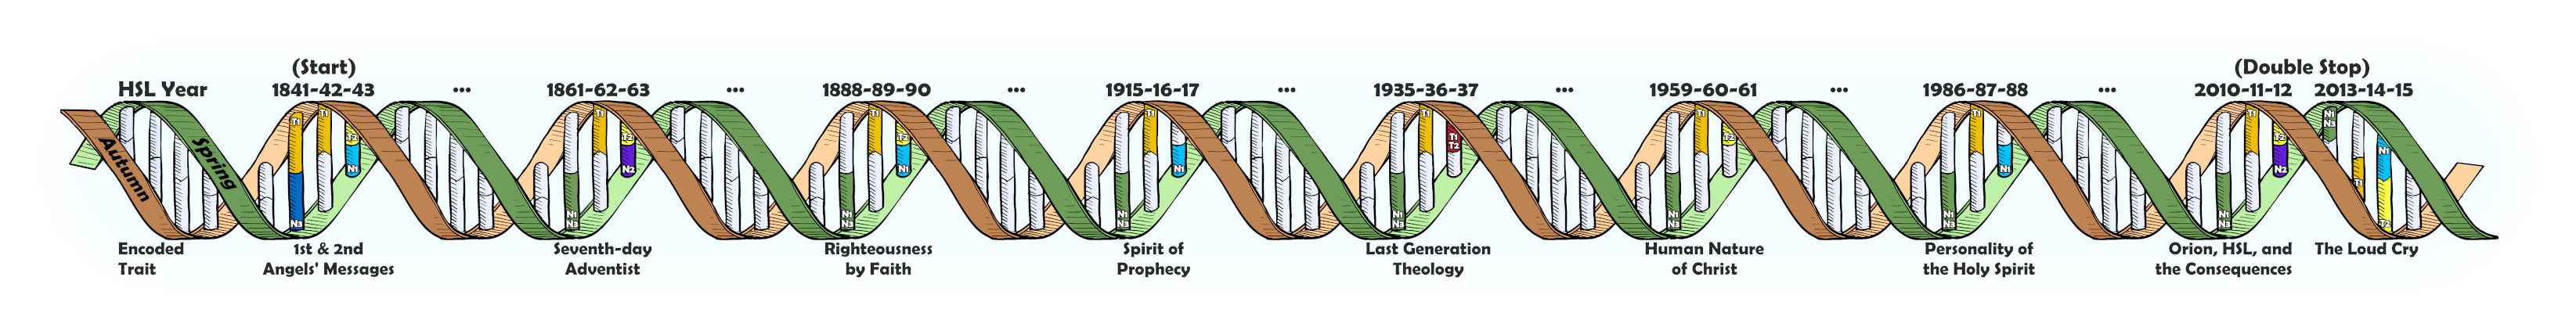 The Gene of Life